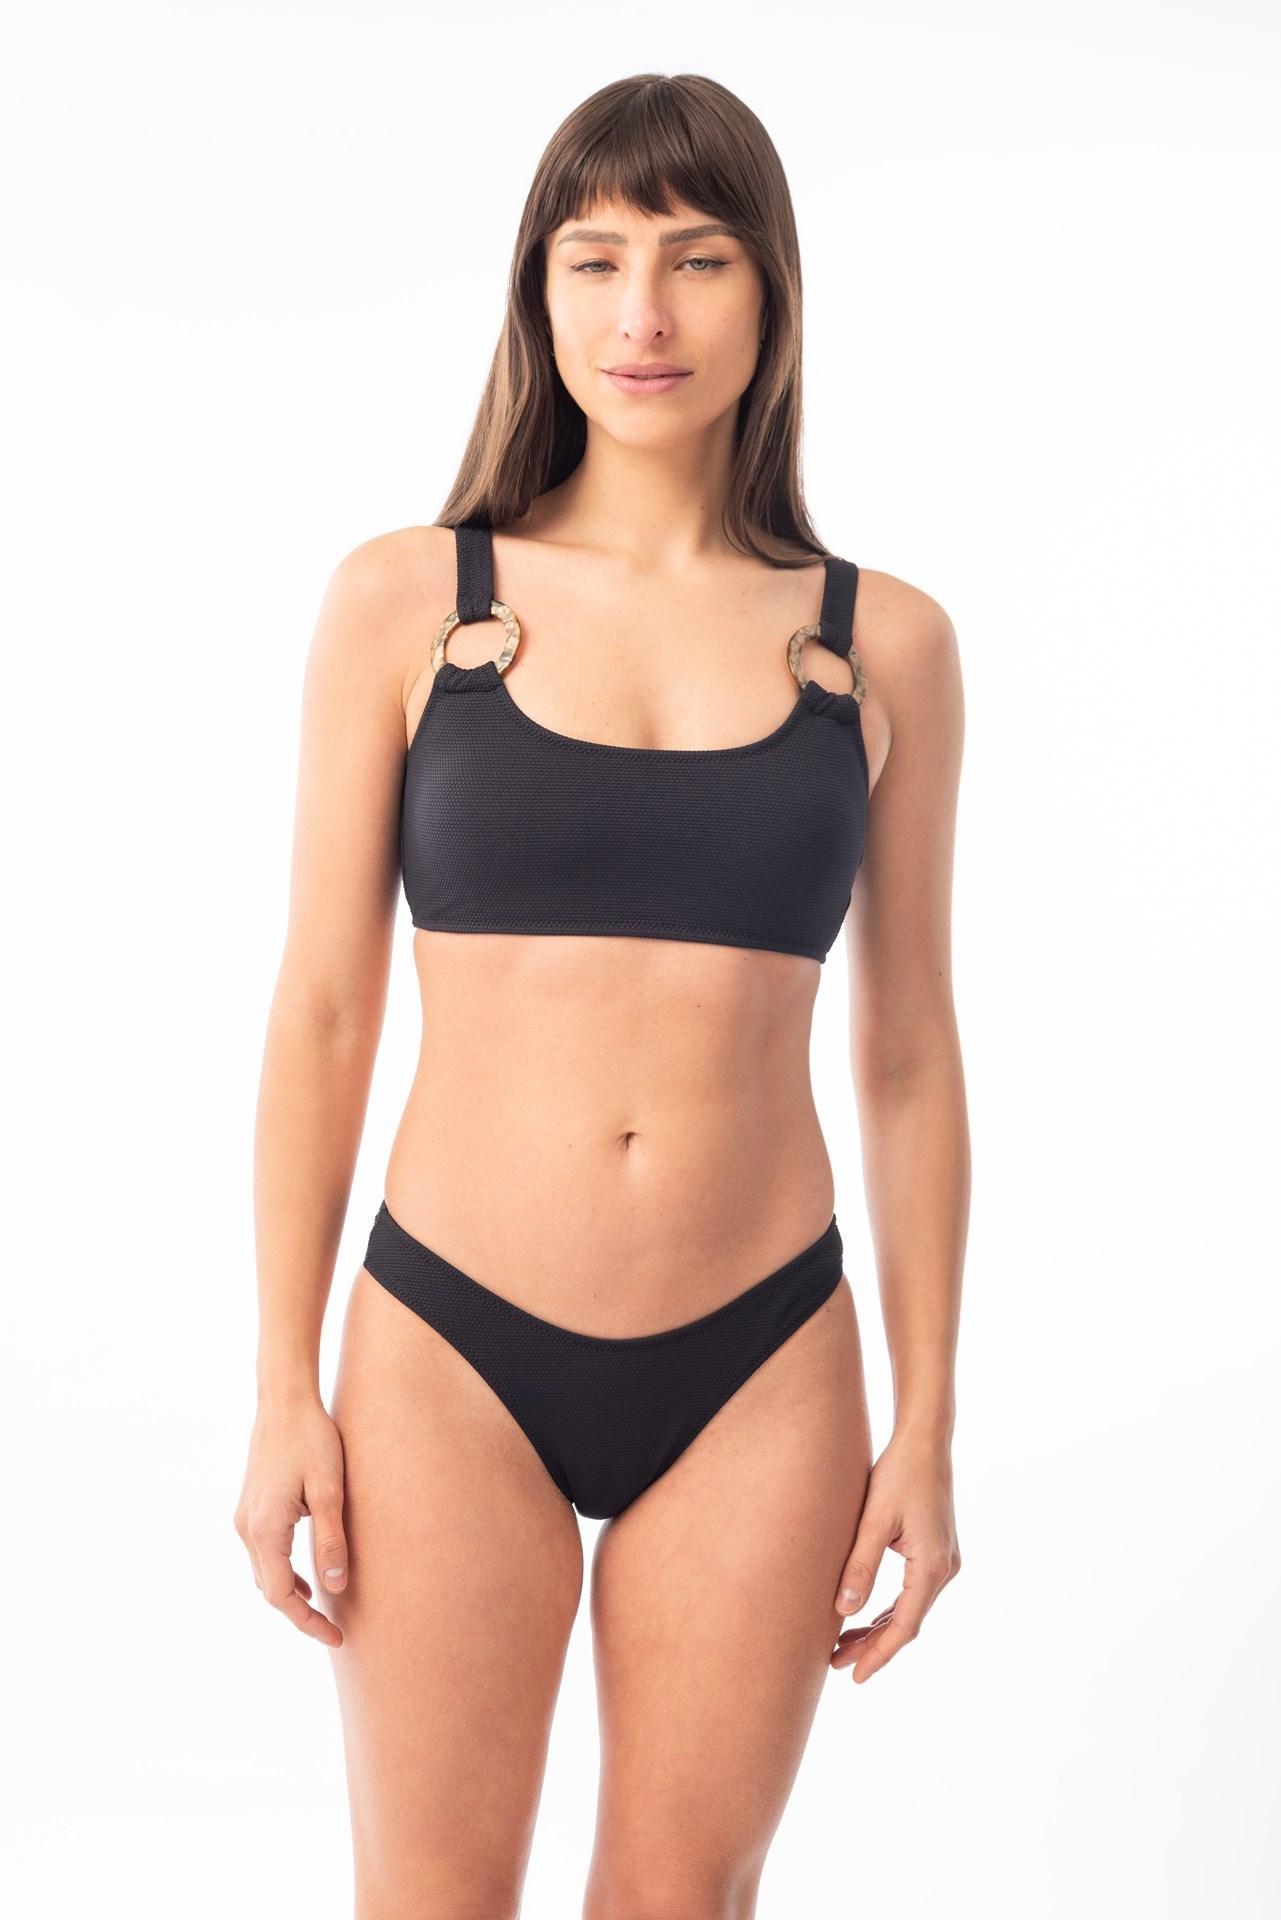 Paraiso- Bikini Top con Argollas negro m